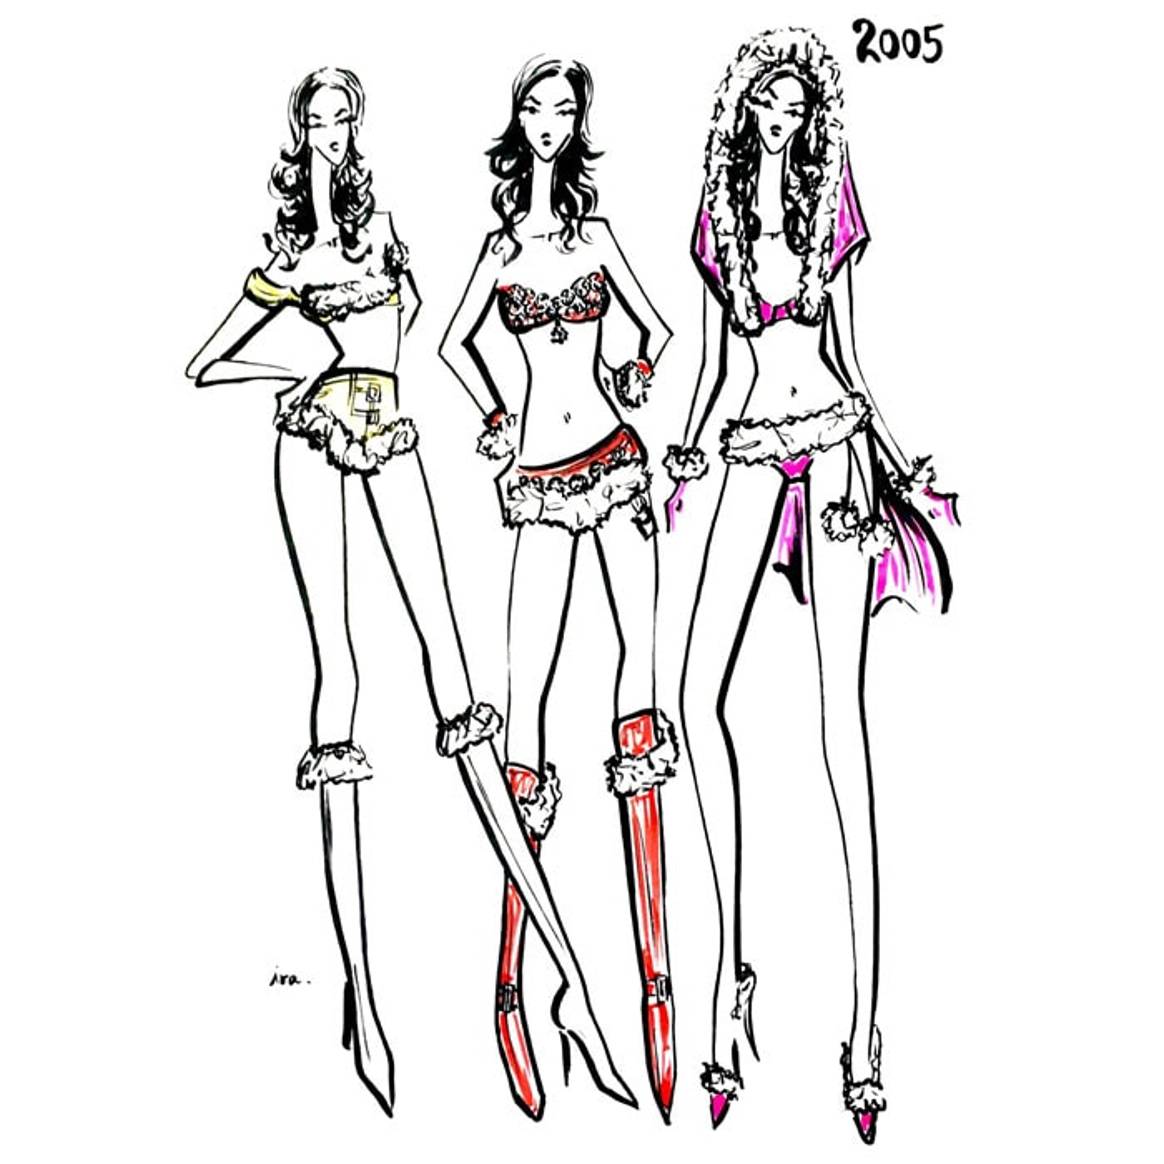 Victoria's Secret annual fashion show: Enjoy it while it lasts